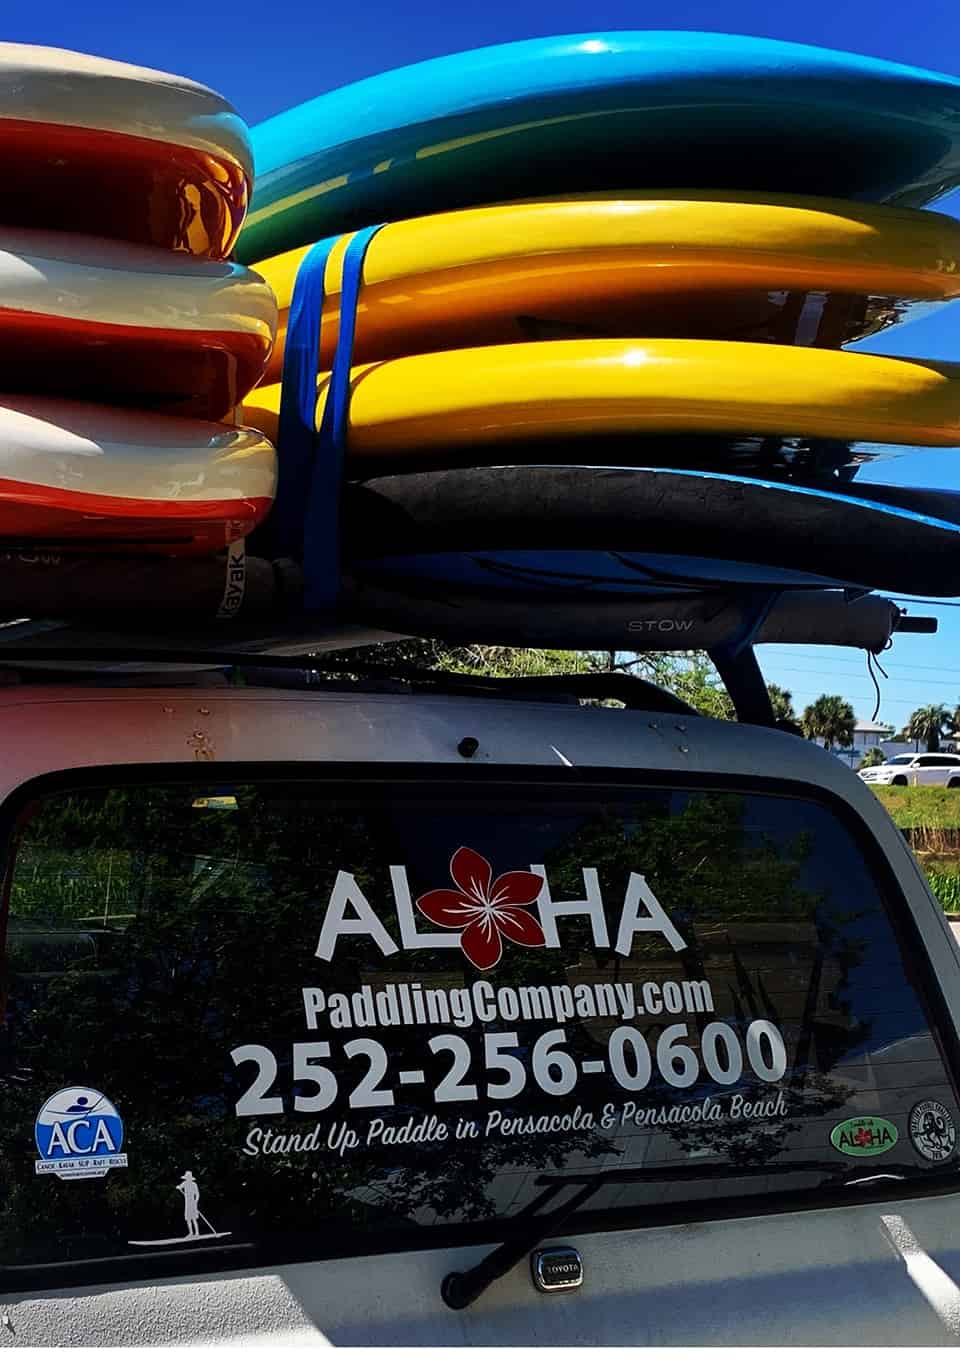 Aloha Paddling Company